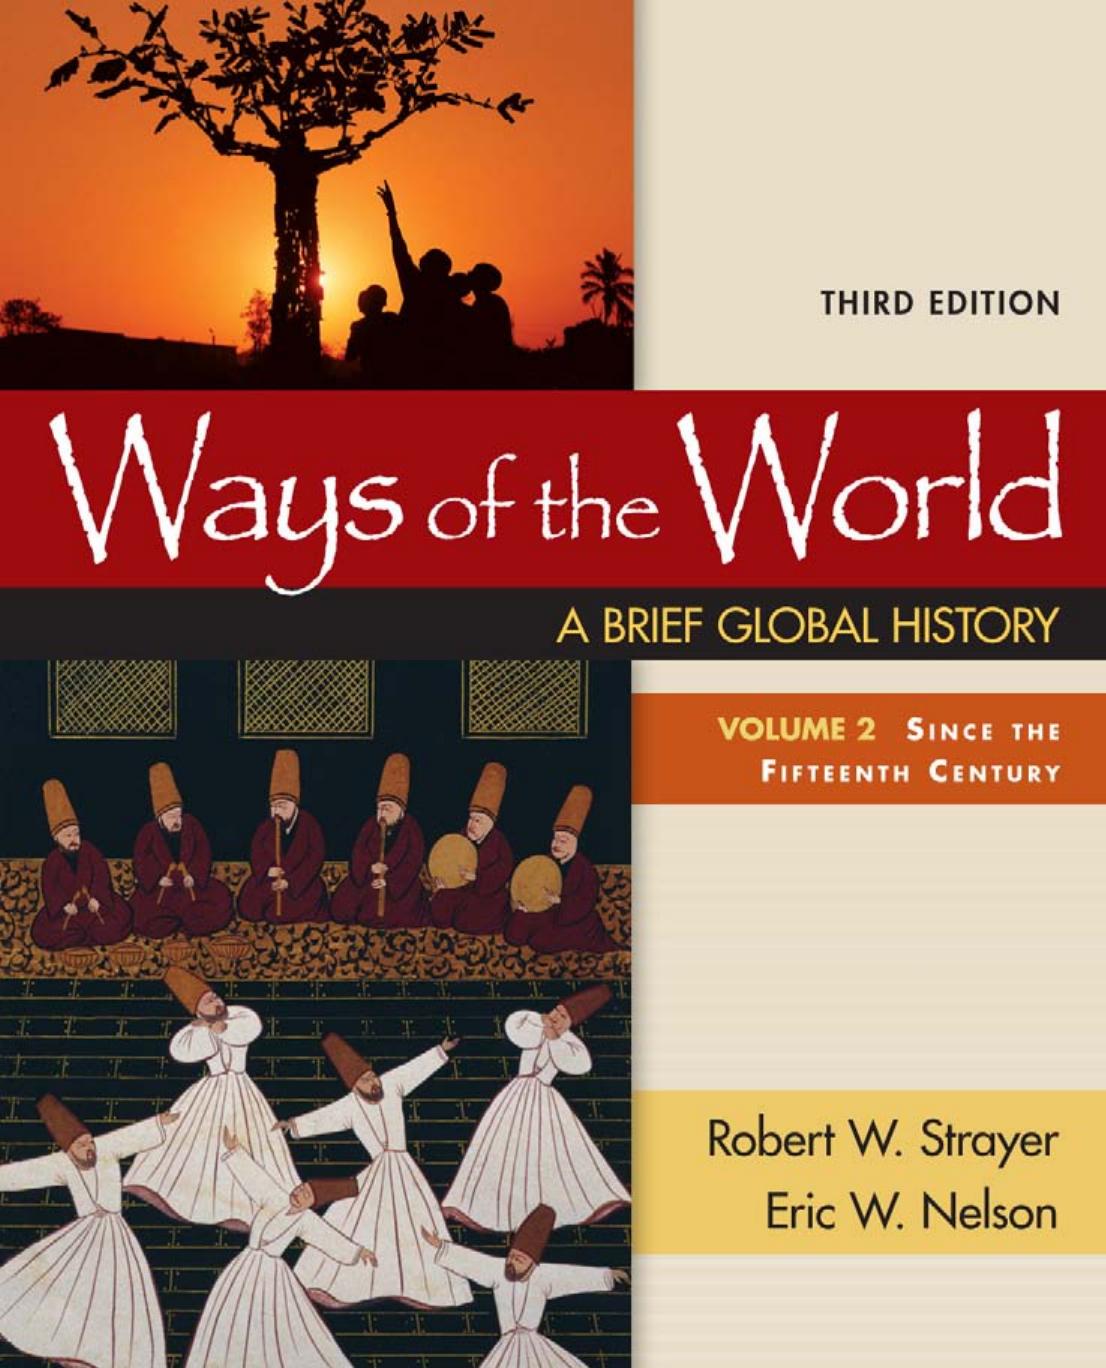 Ways of the World A Brief Global History, Volume 2,3rd Edition by Robert W. Strayer - robert w. strayer.jpg